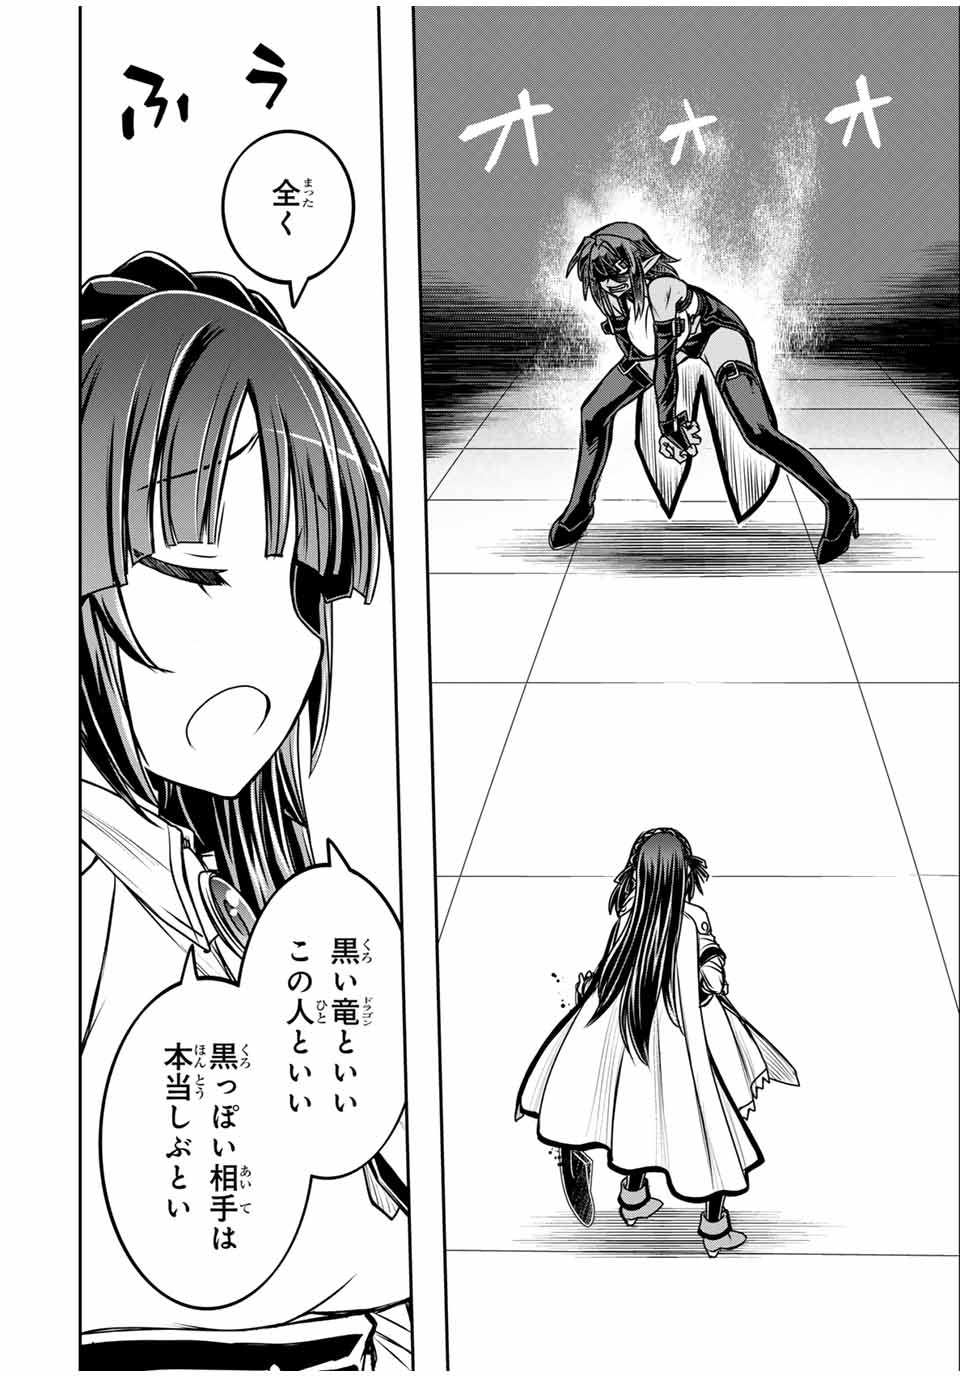 Nengan no Akuyaku Reijou (Last Boss) no Karada wo Teniiretazo!  - Chapter 27 - Page 2